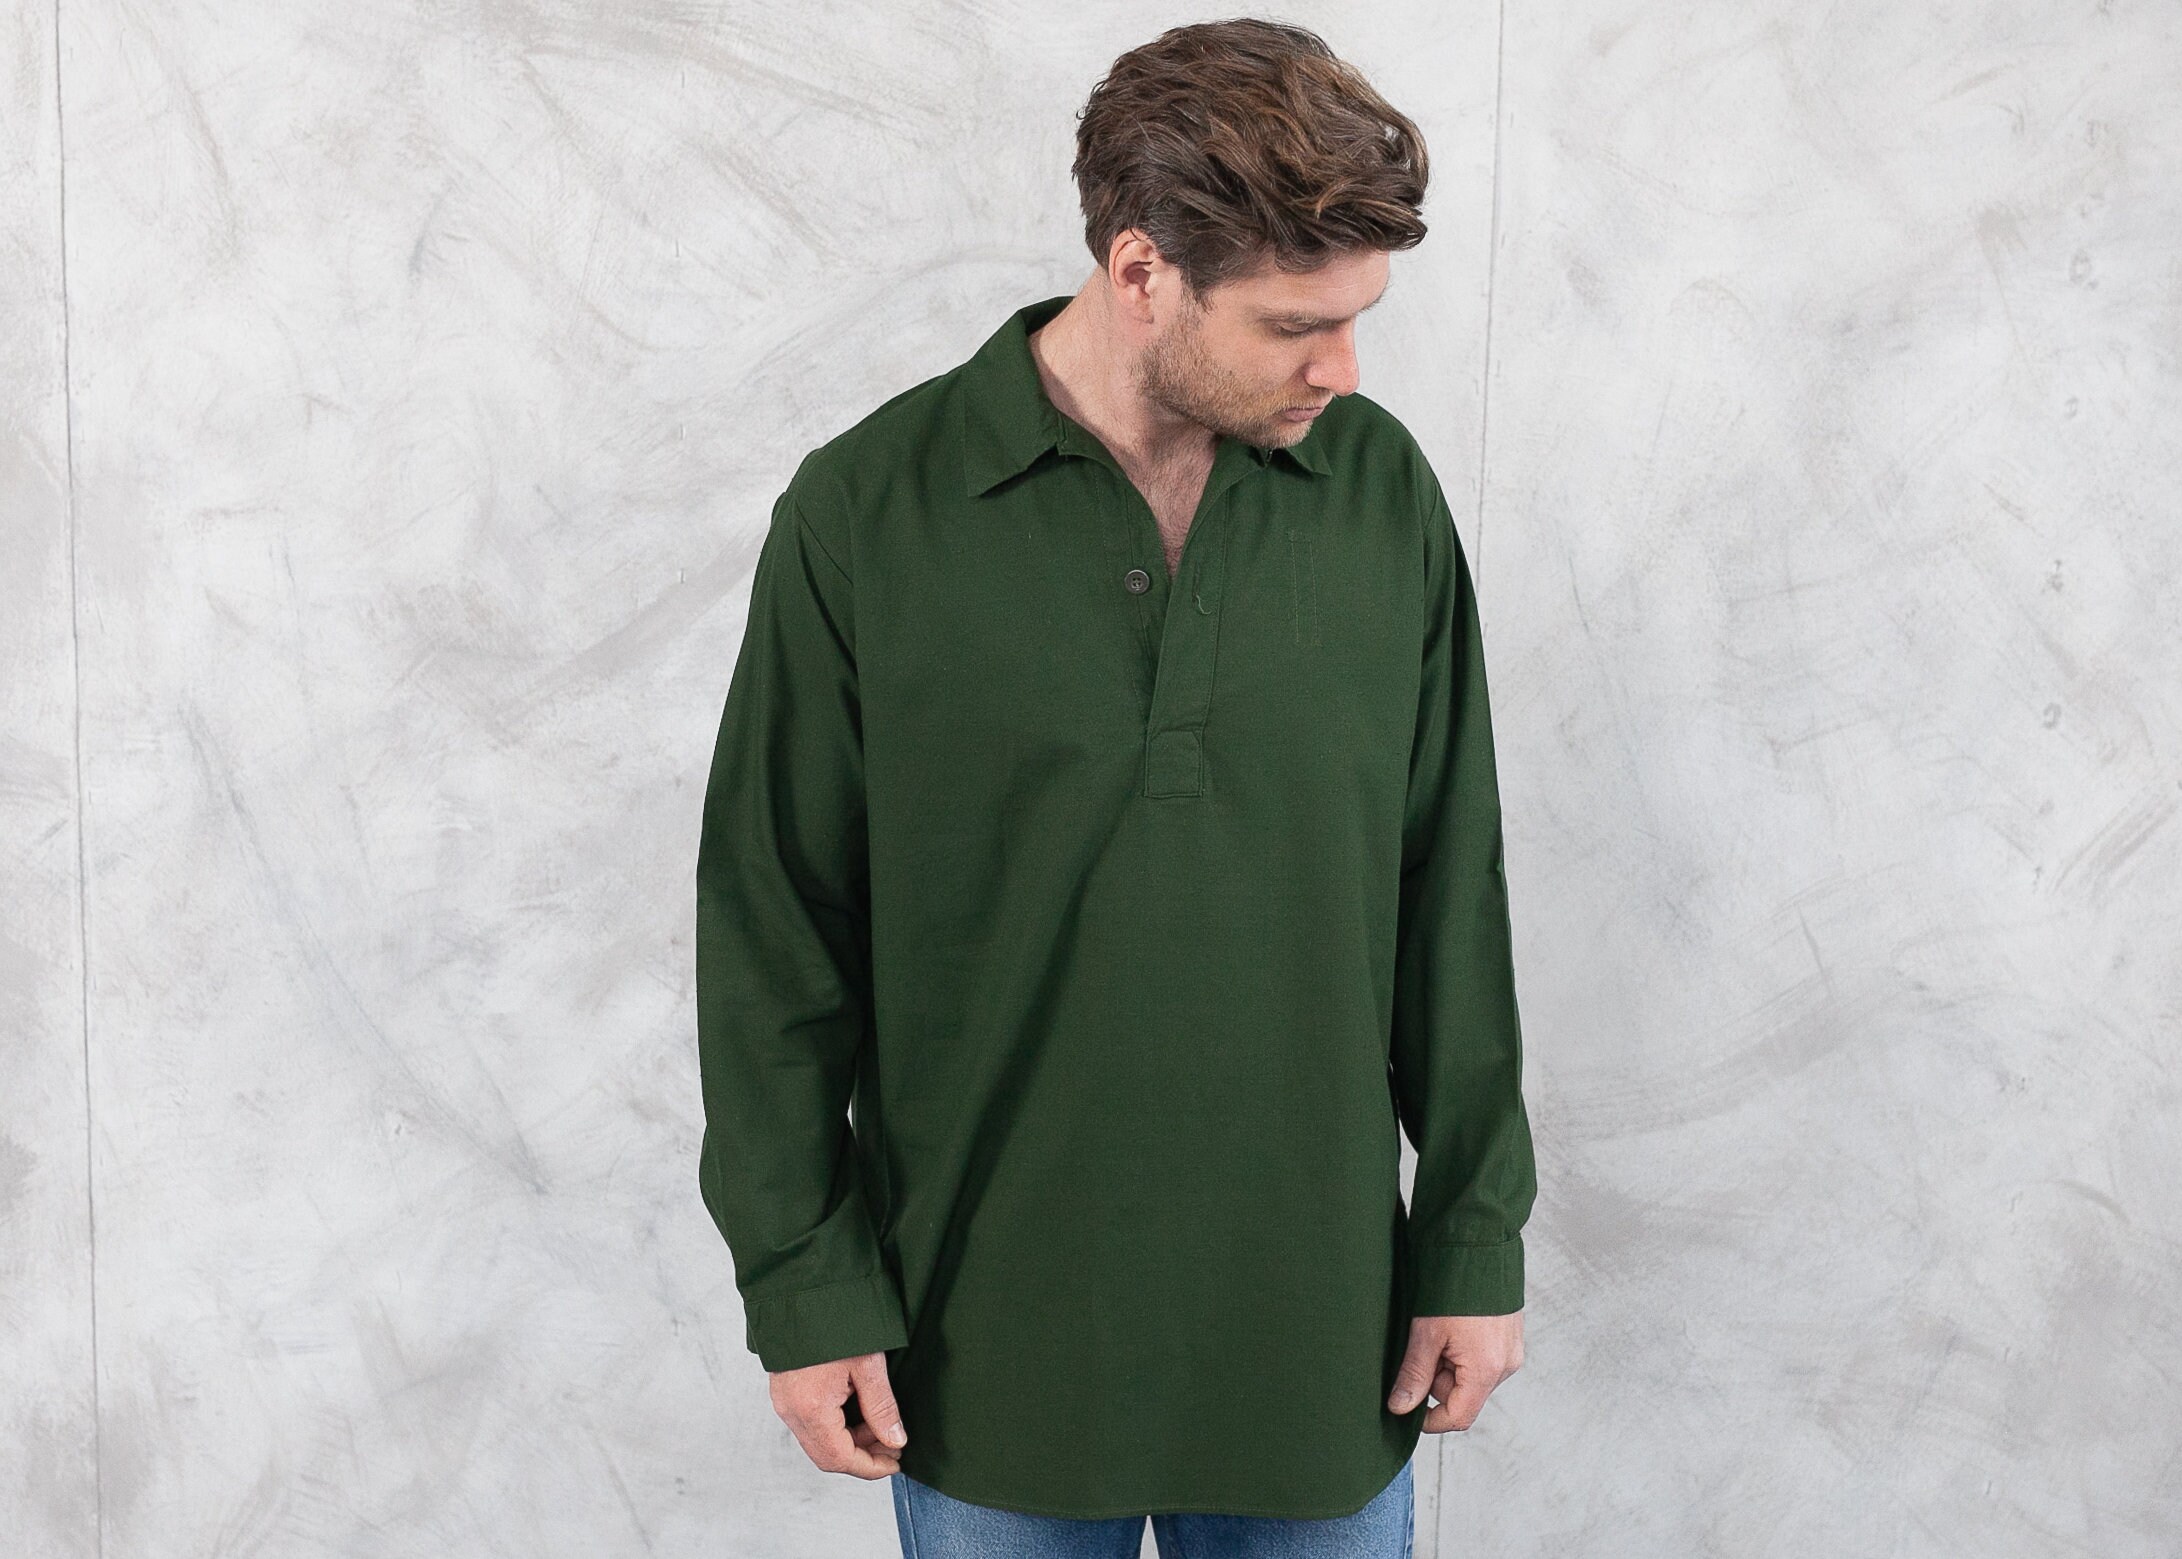 Vintage 80s Army Anorak Shirt . Cotton Combat Shirt Green Shirt ...